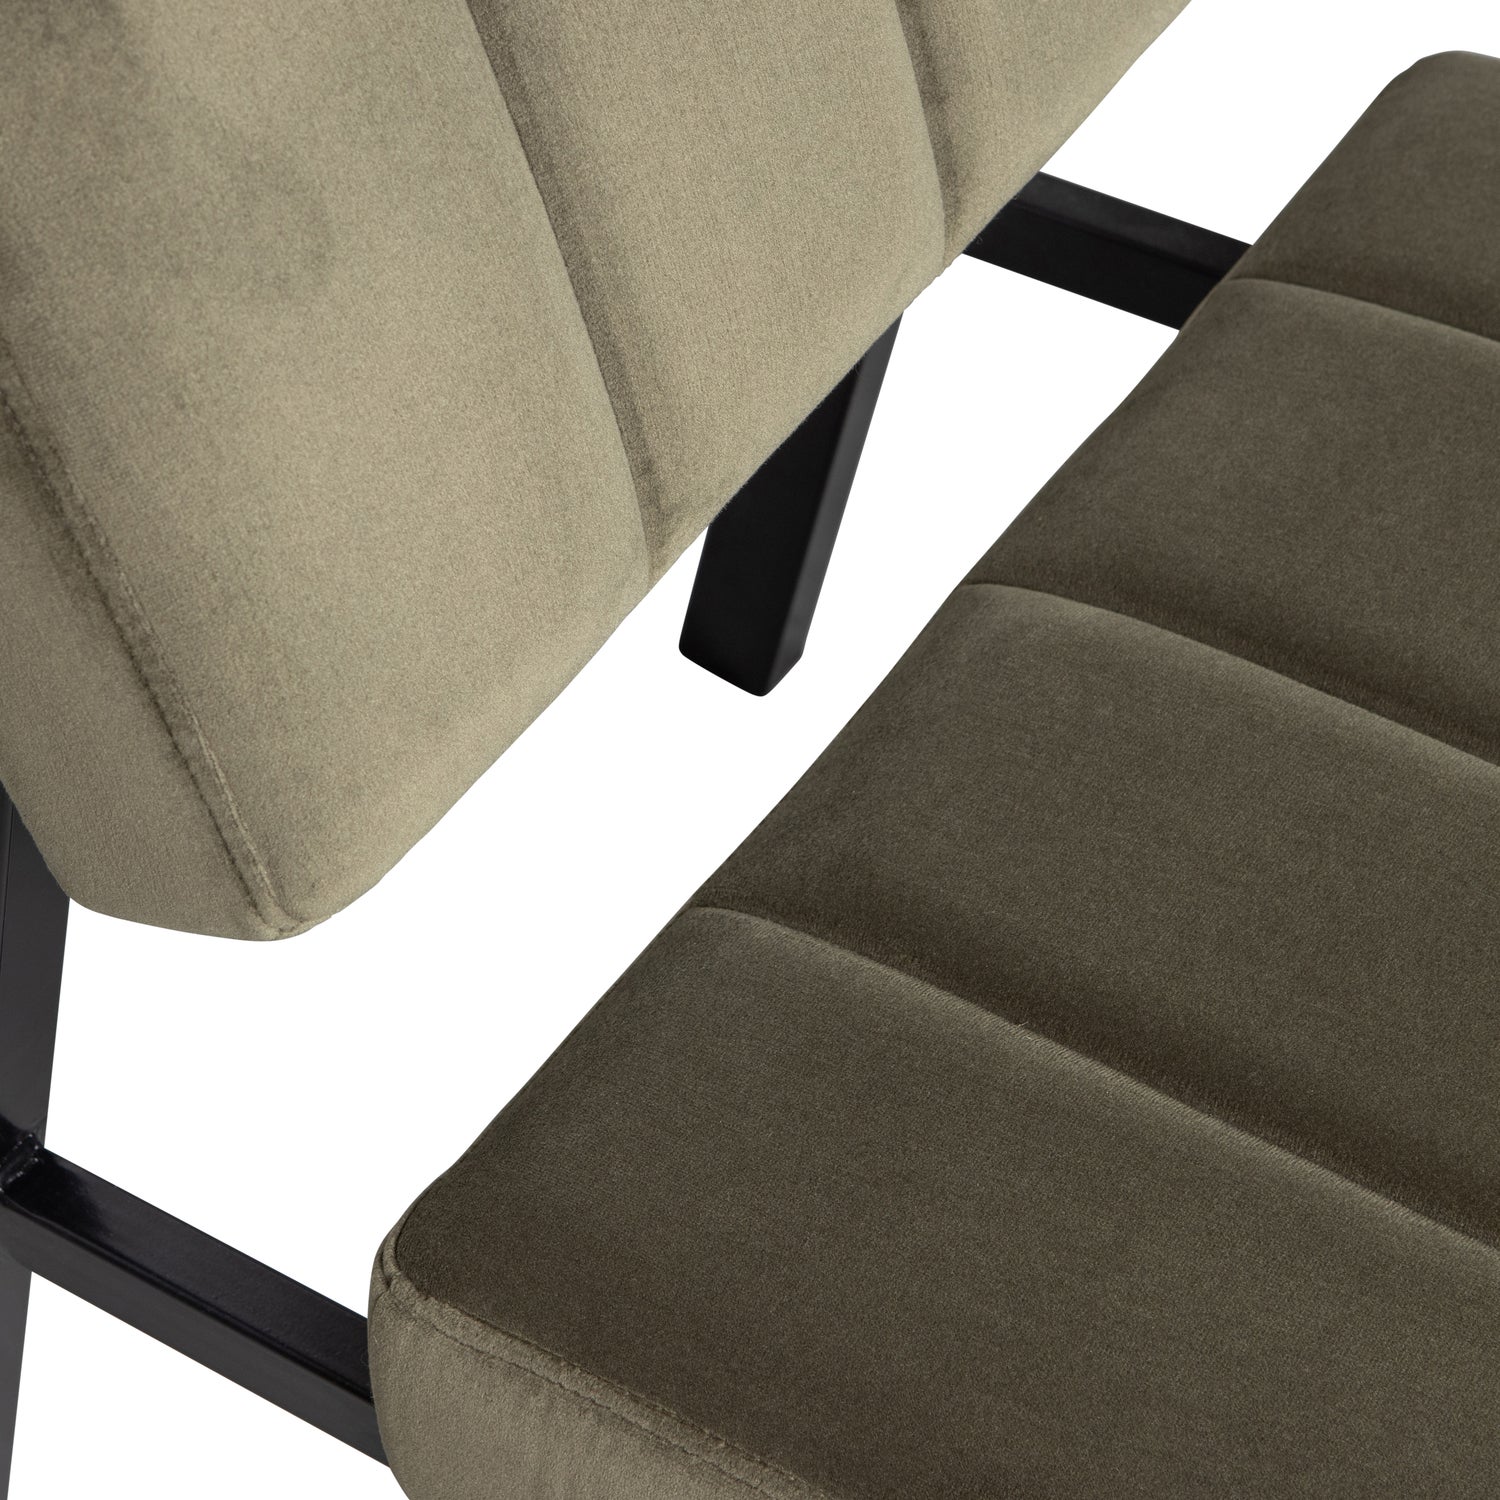 377205-A-02_VS_WE_Kaja_fauteuil_velvet_army_detail.jpg?auto=webp&format=png&width=1500&height=1500